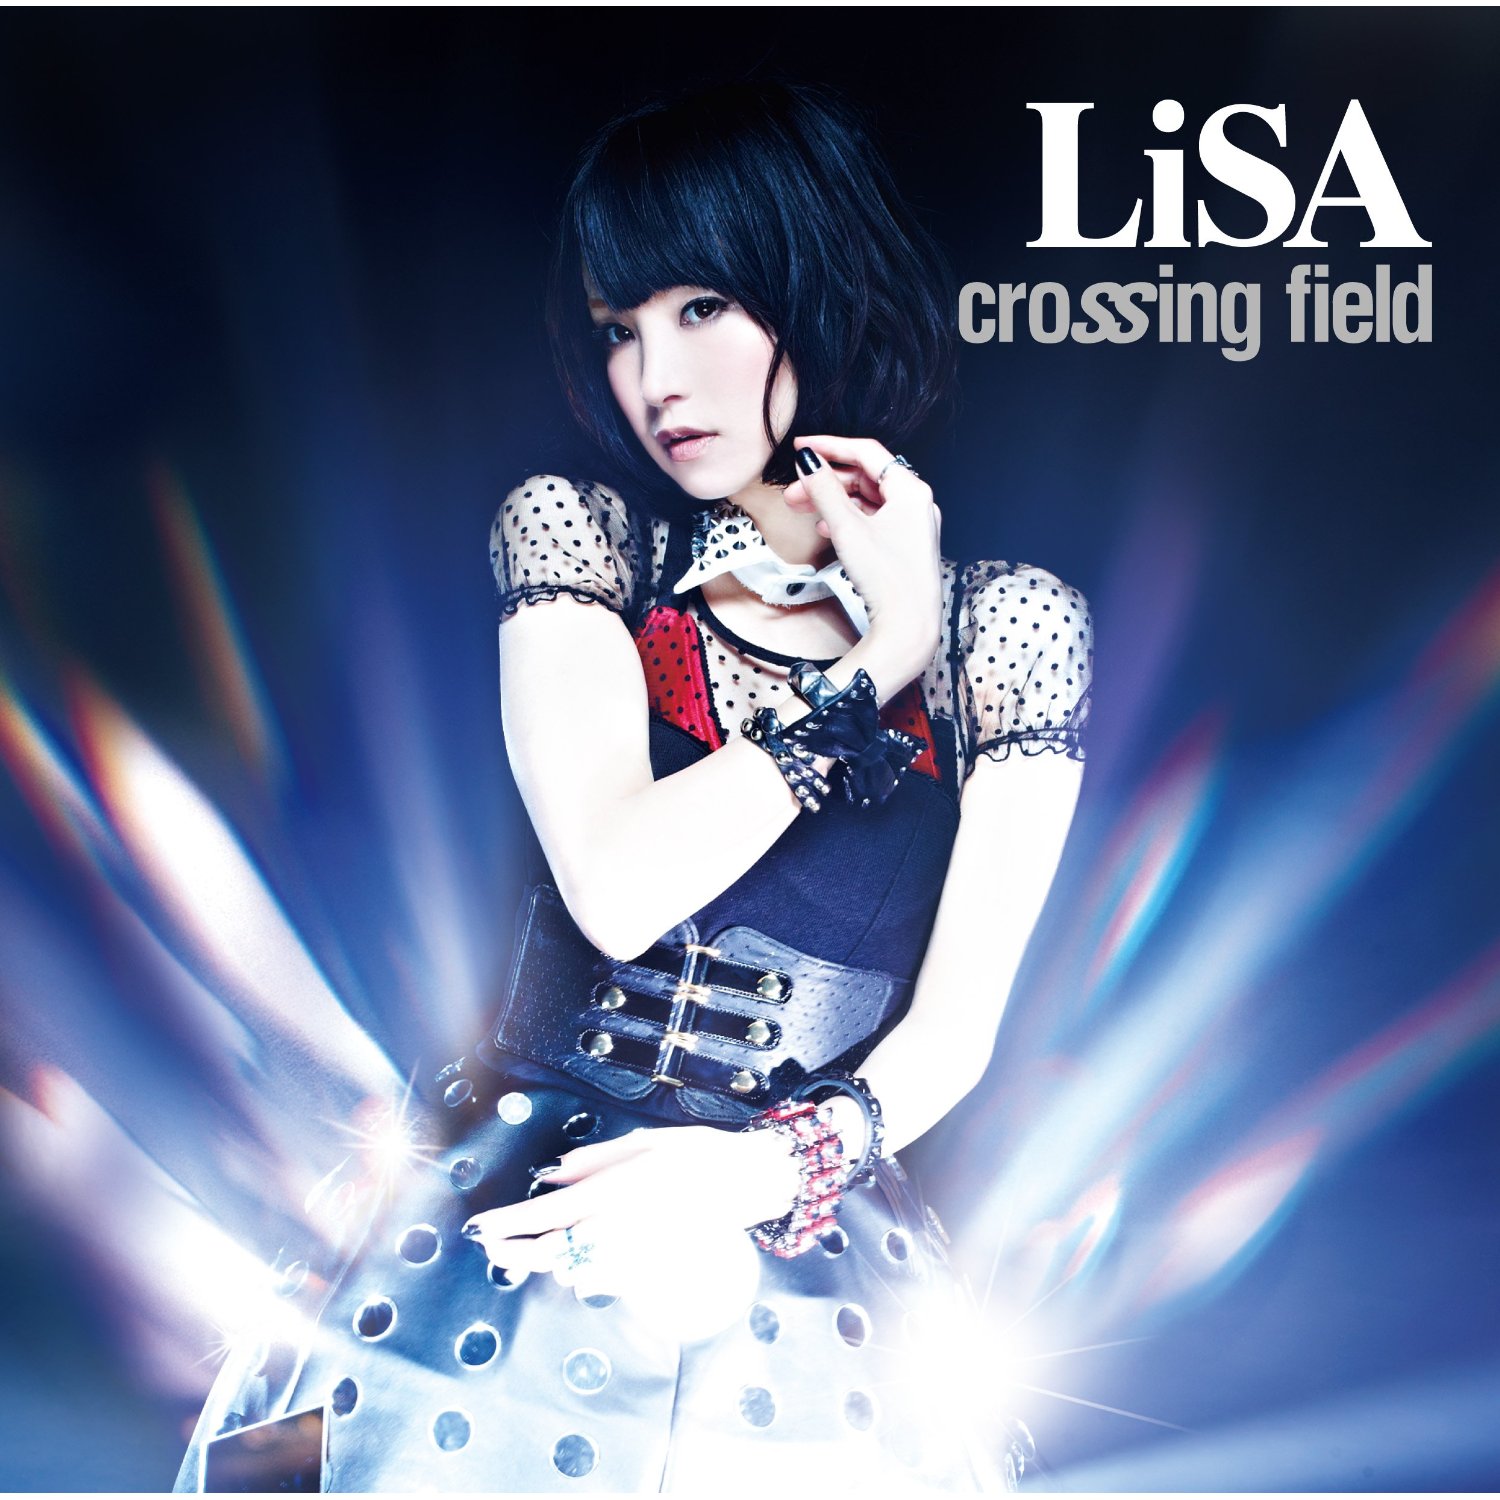 Crossing Field by LiSA
© LiSA / Aniplex Inc. / Sony Music